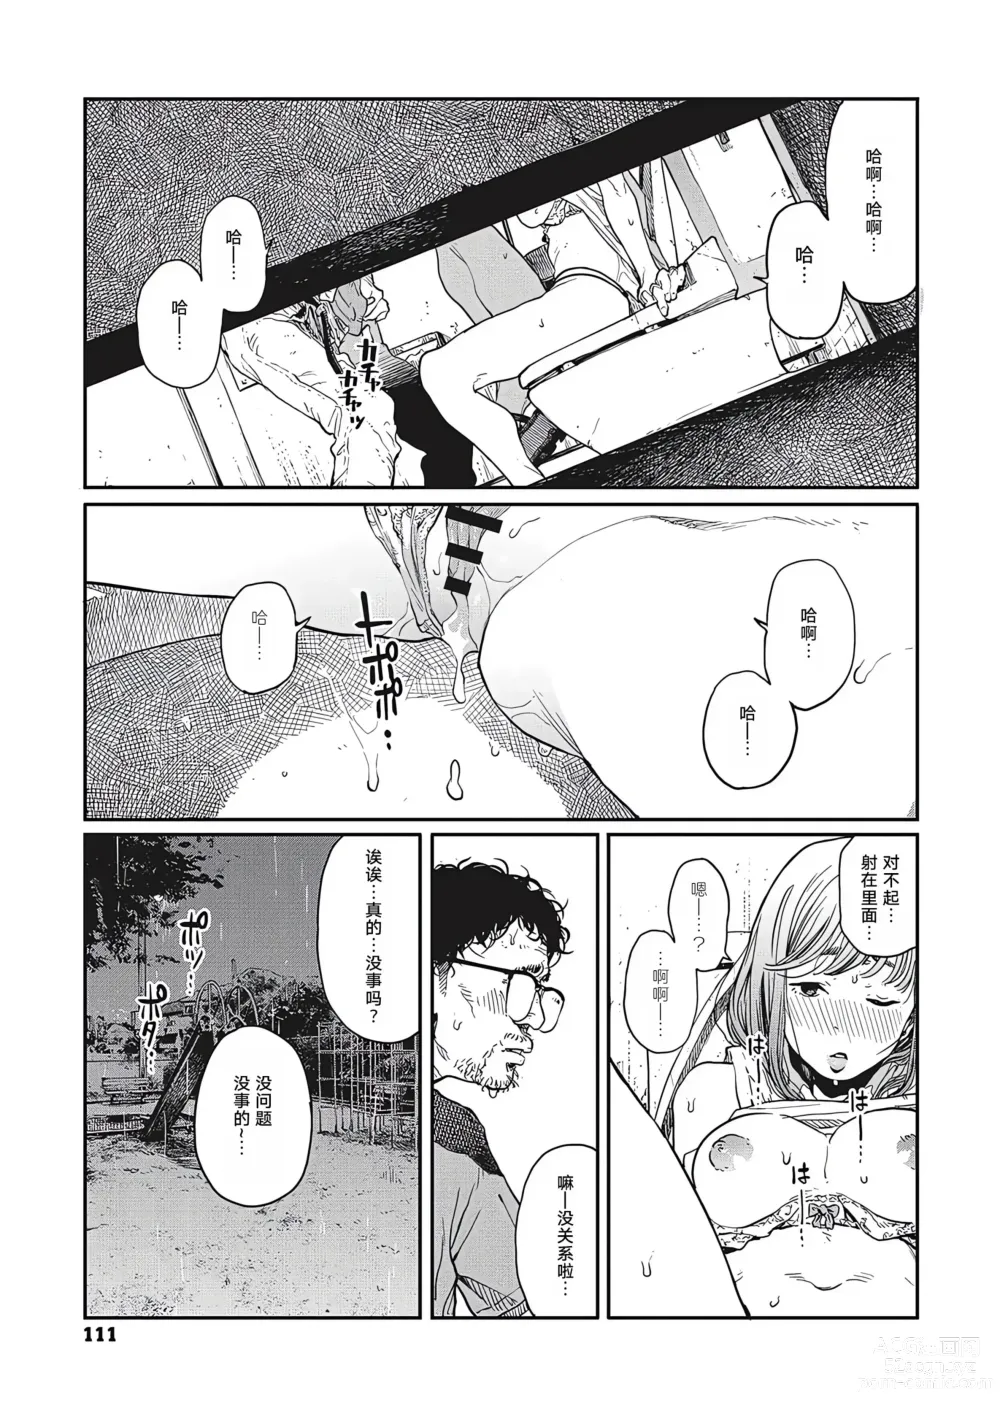 Page 25 of manga 雨夜里